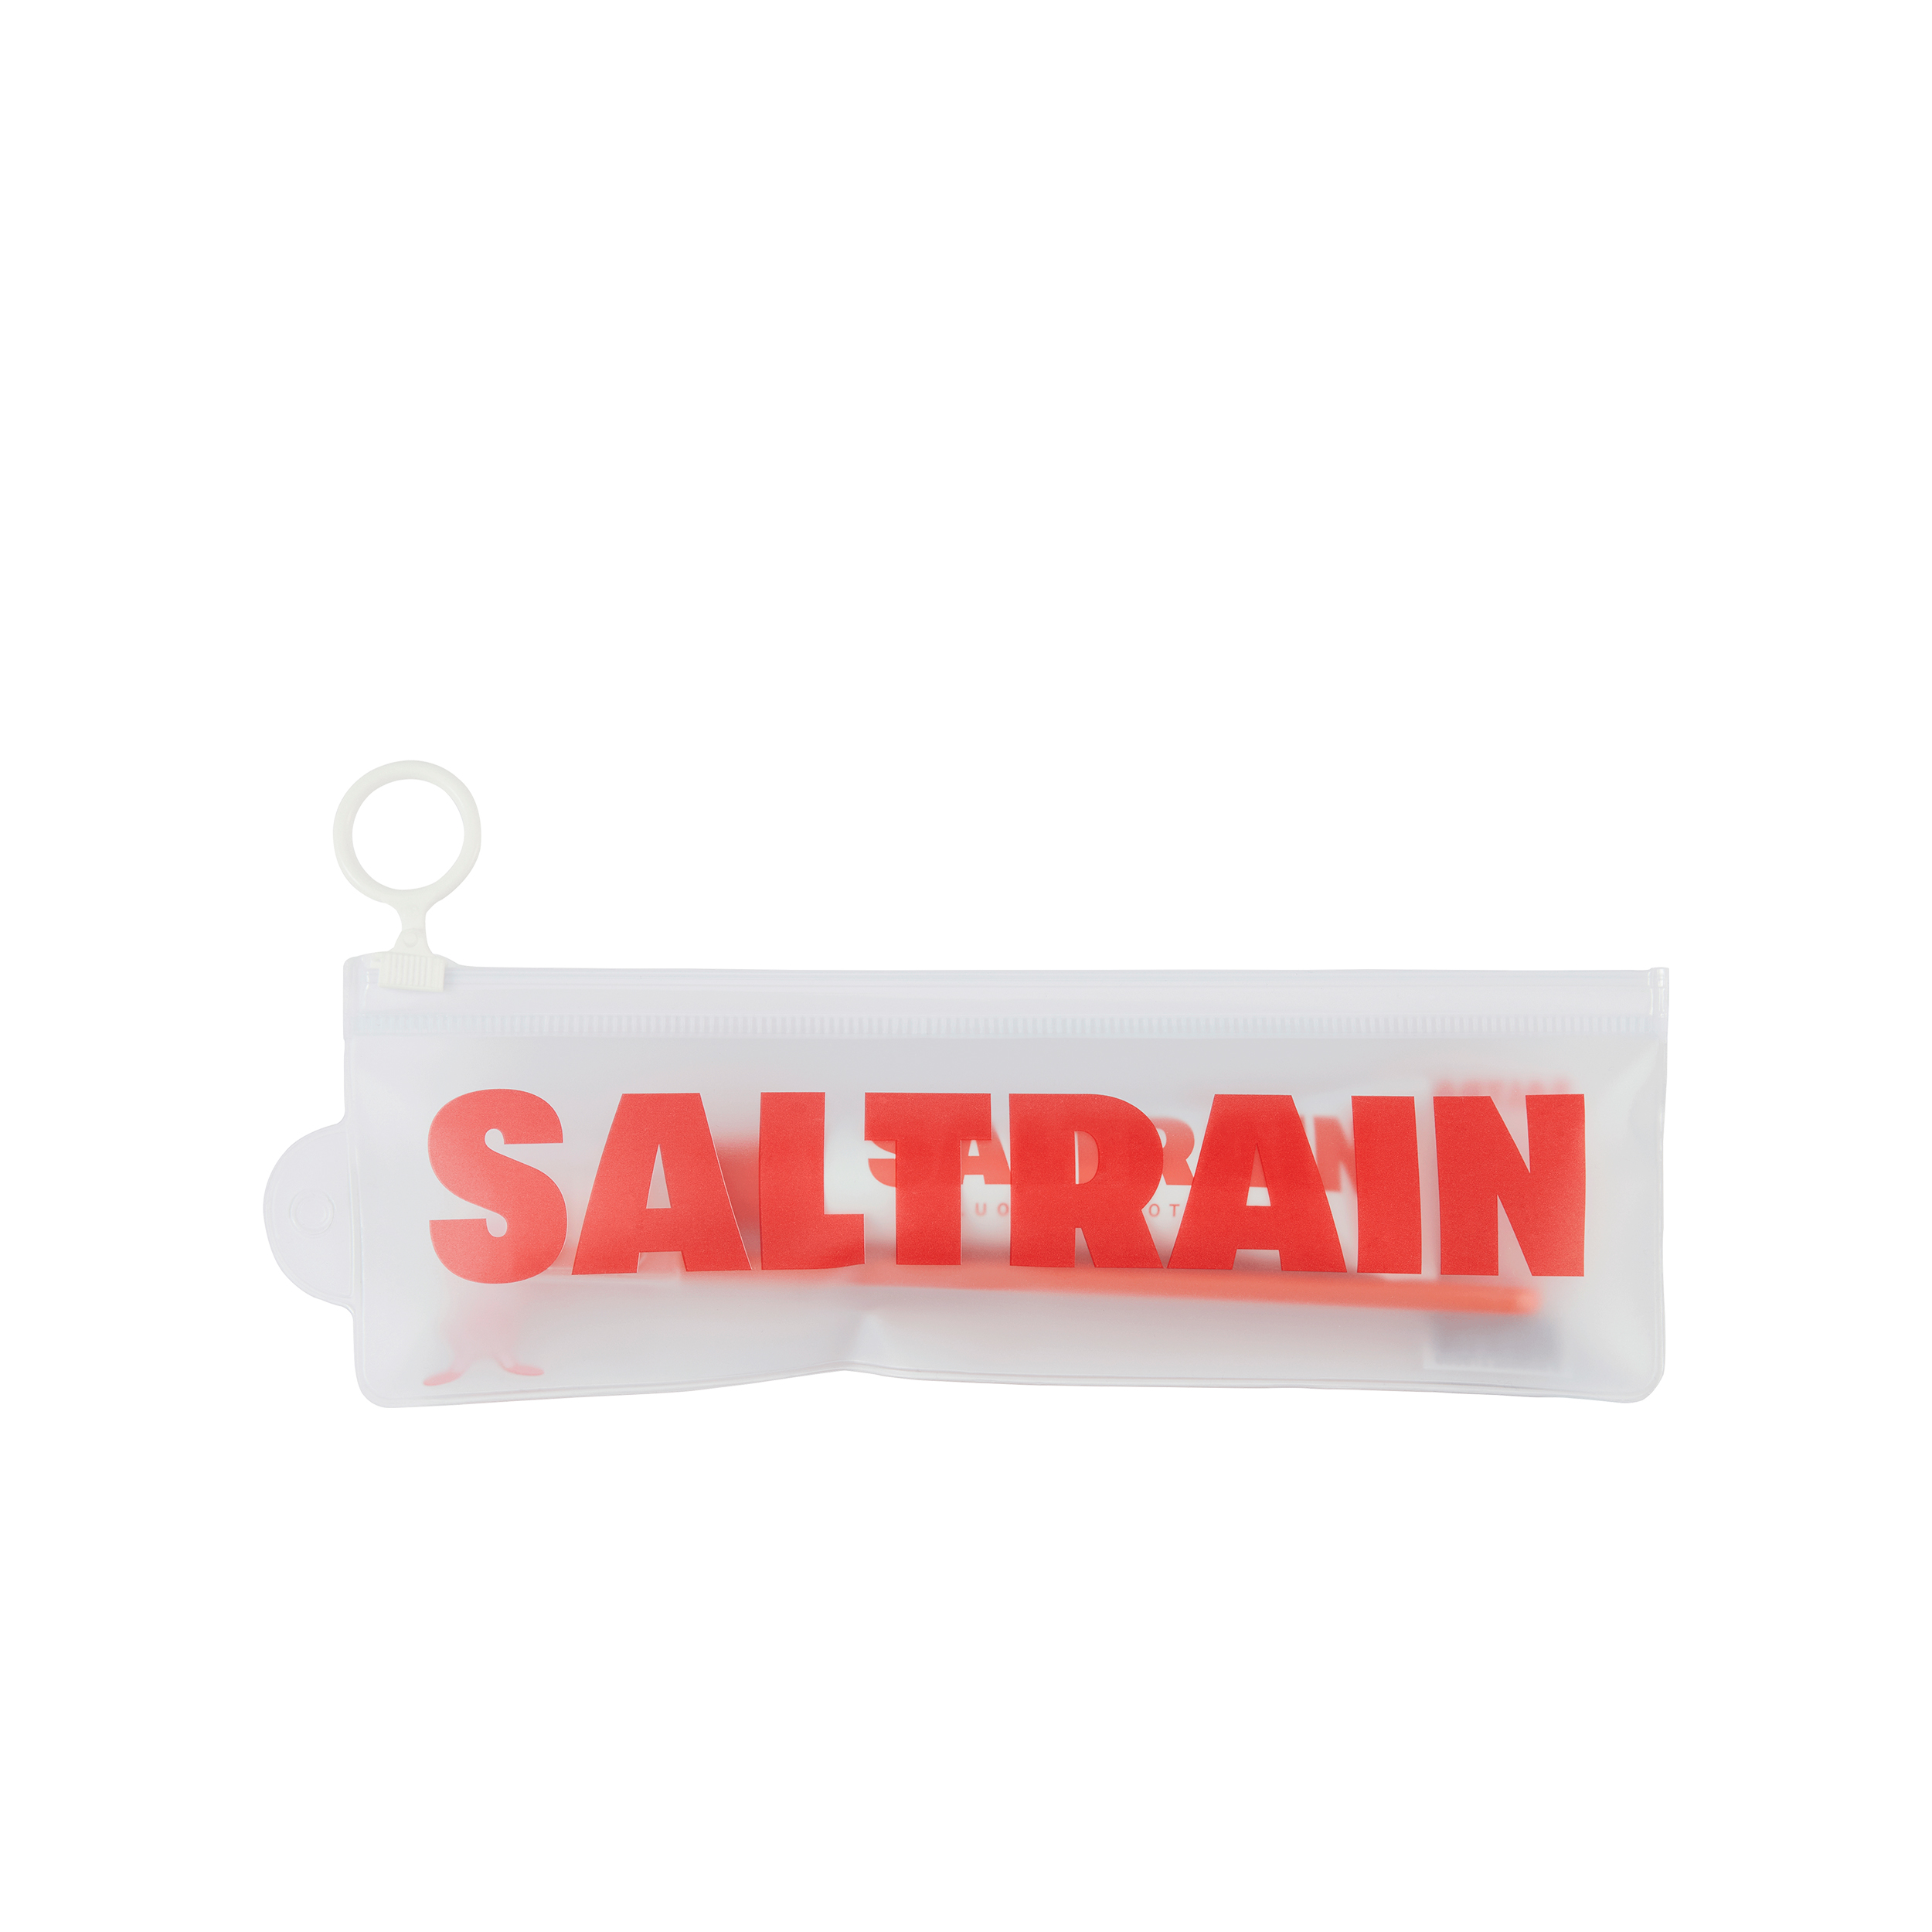 SALTRAIN SALTRAIN Дорожный набор красный (Зубная паста Red Clean Breath +зубная щётка) 30 гр АРТ-4914 Дорожный набор красный (Зубная паста Red Clean Breath +зубная щётка) 30 гр - фото 1